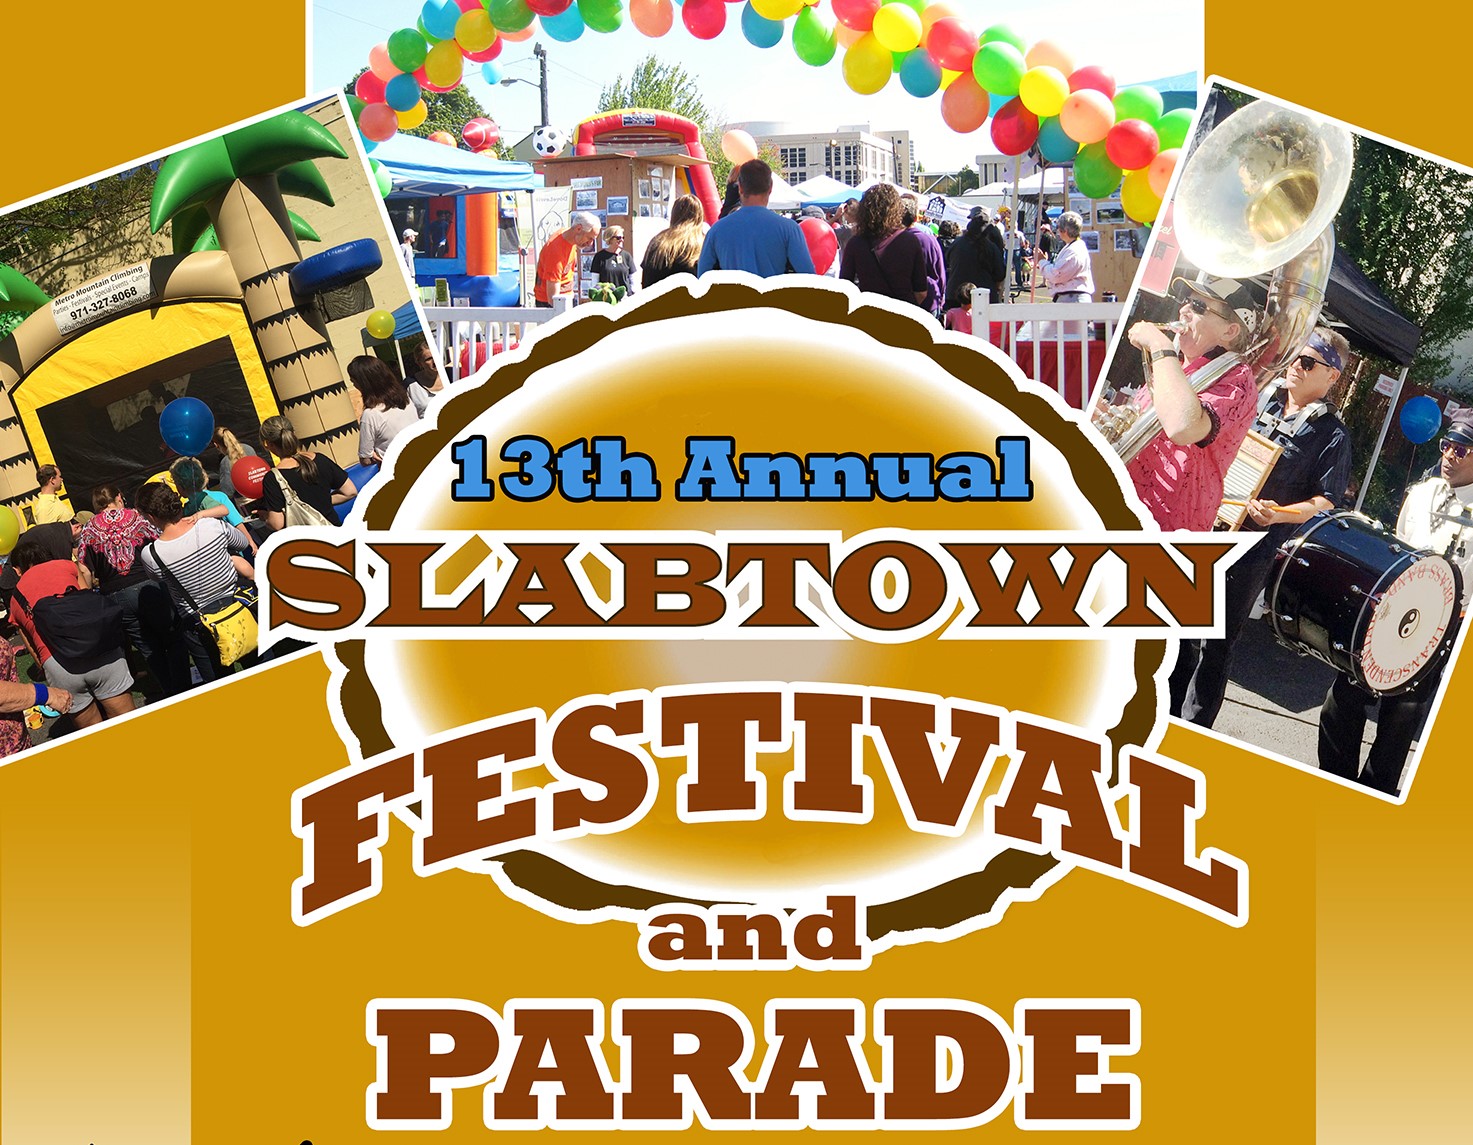 13th Annual Slabtown Festival